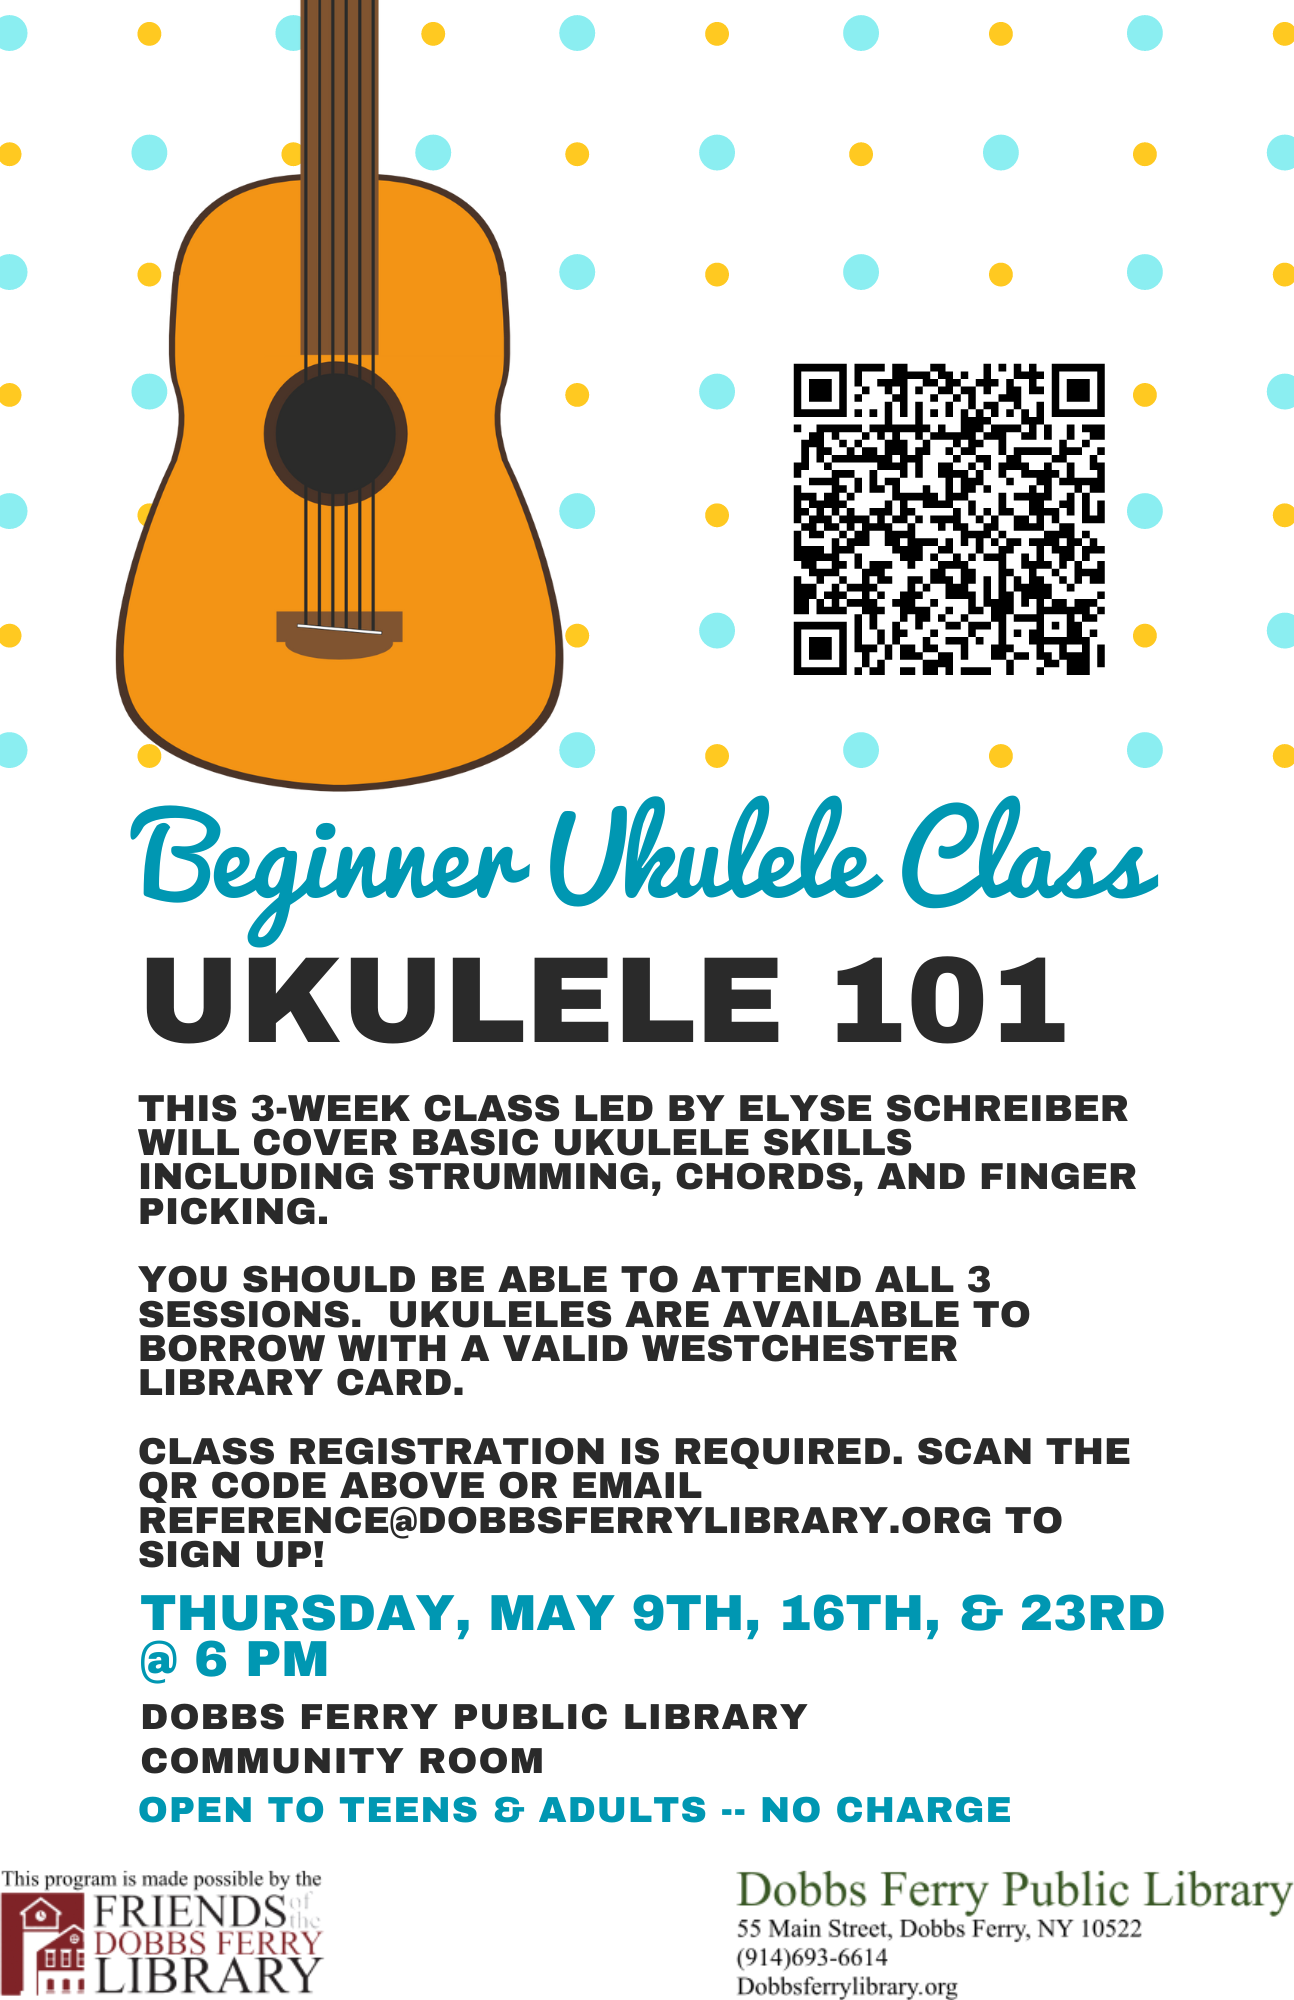 Ukulele 101 for Teens & Adults (Program Full - Waitlist)